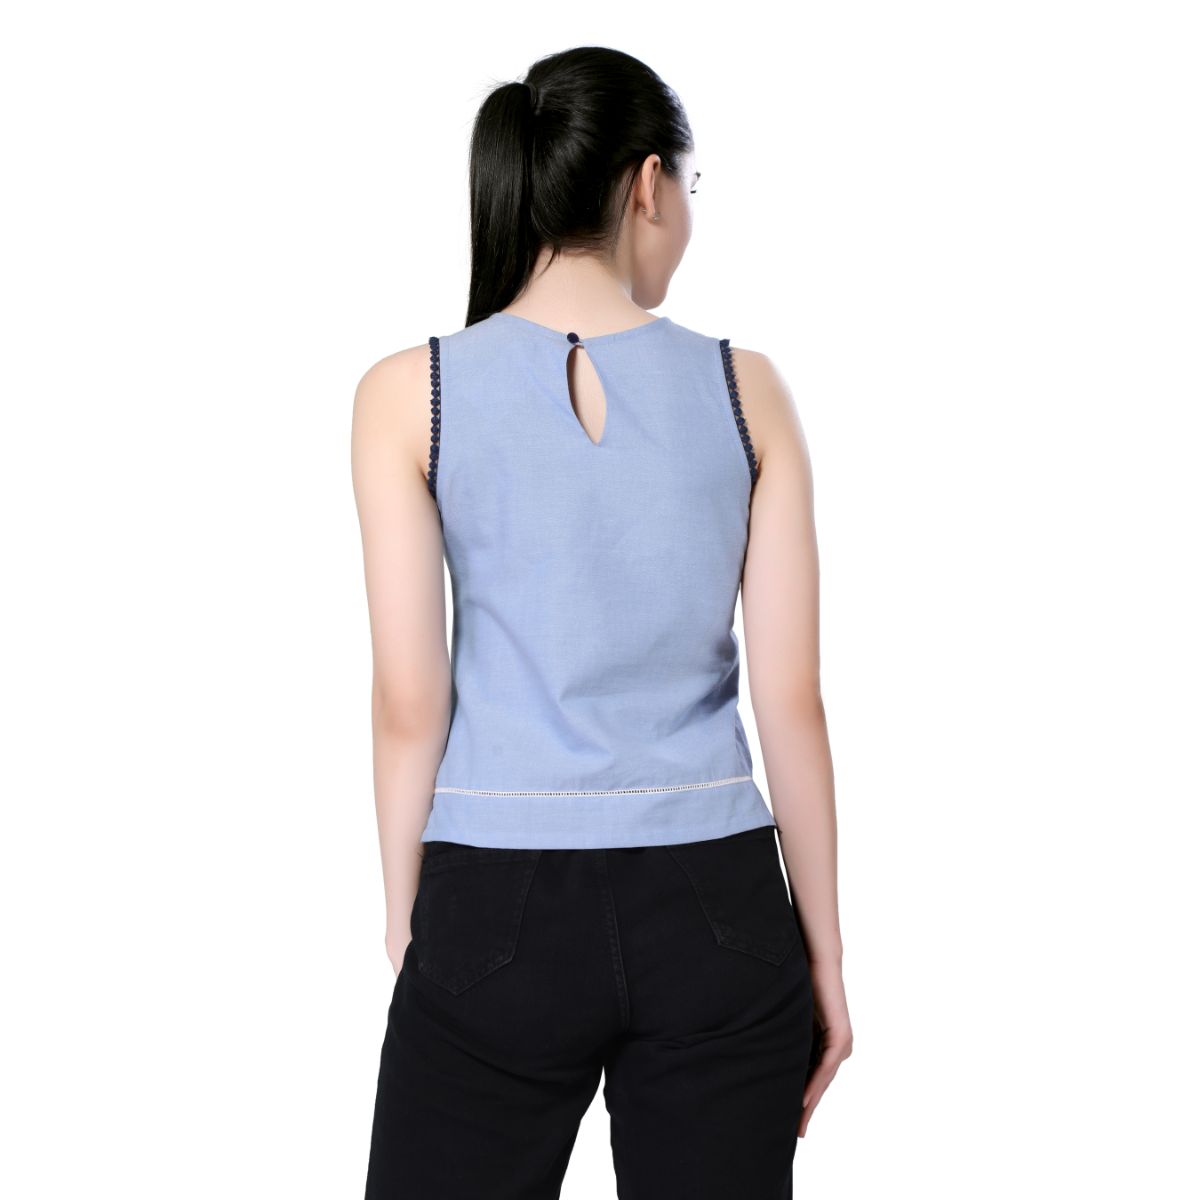 Mantra blue sleeveless crop top